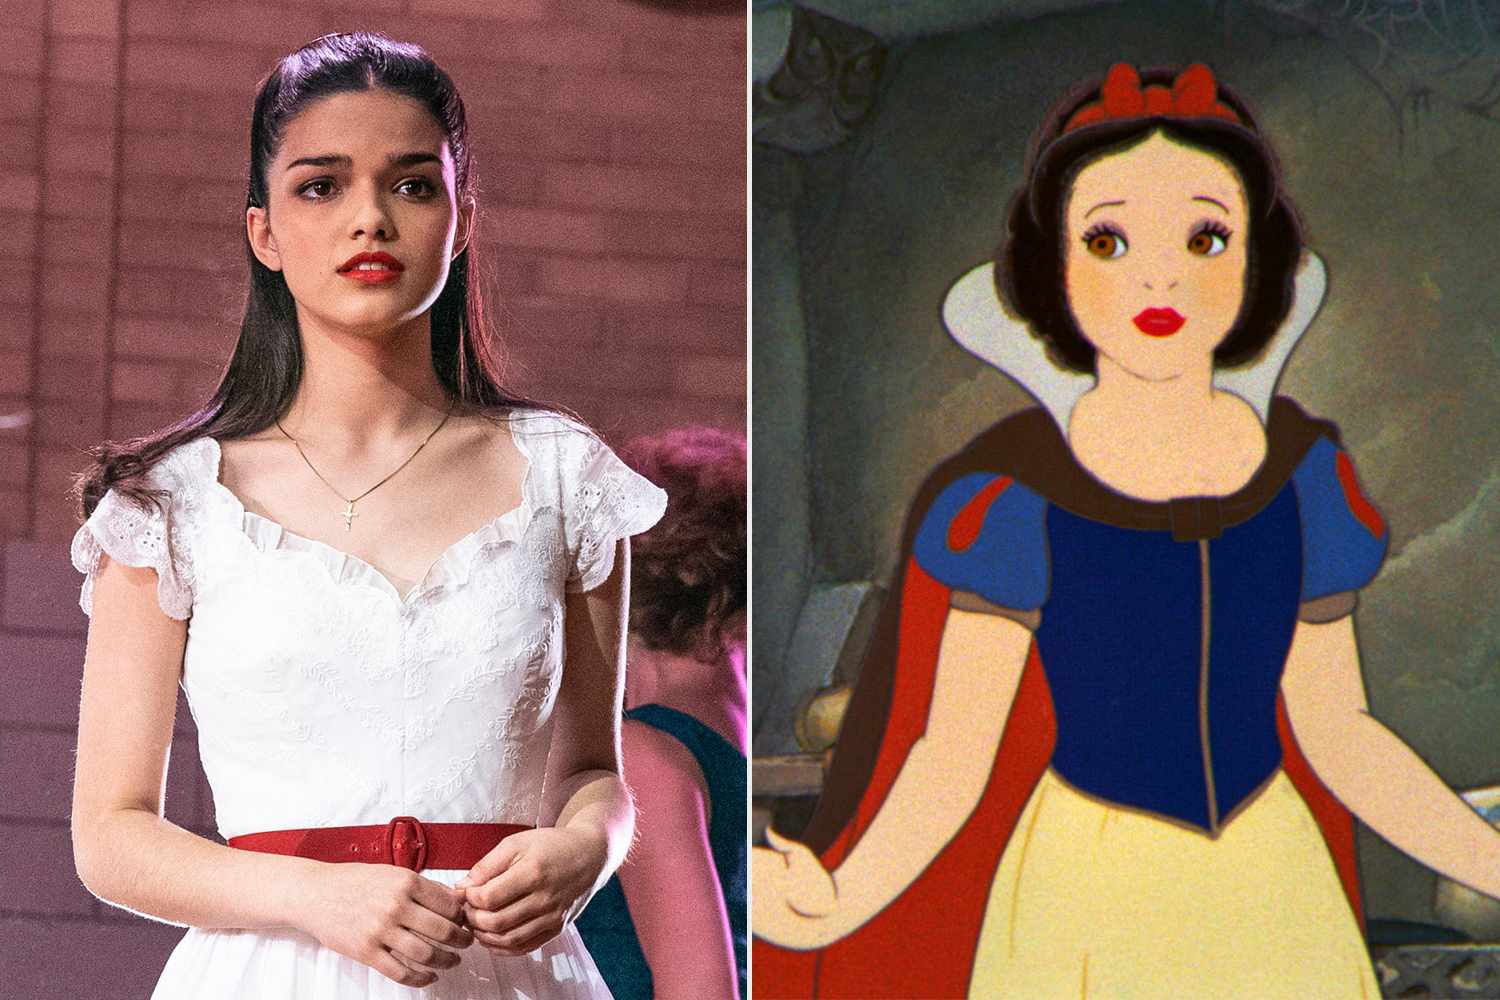 Rachel Zegler Responds to Backlash Over Her Casting in Snow White |  PEOPLE.com